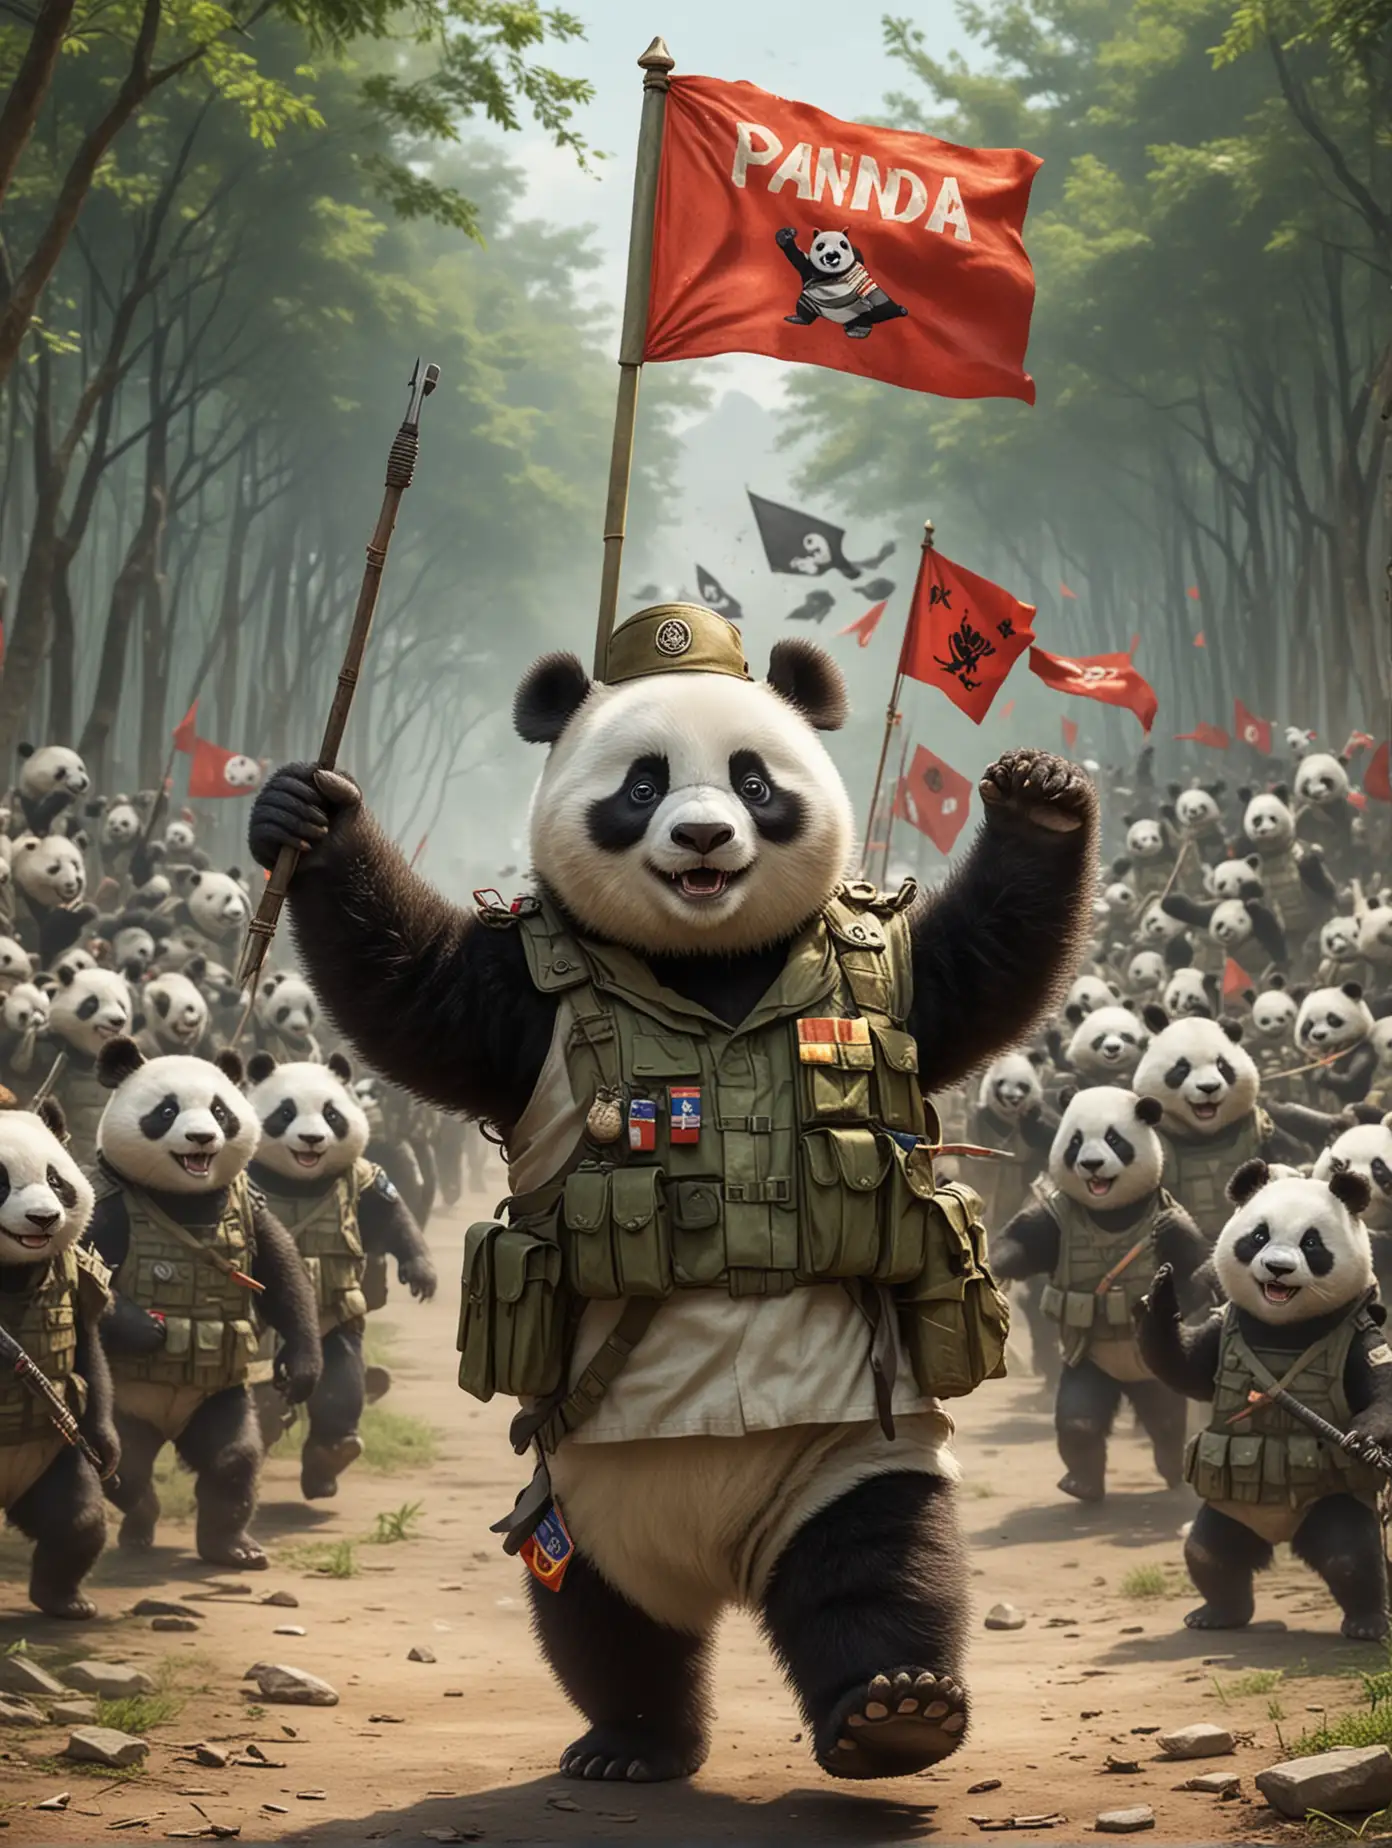 A panda wearing a military uniform, followed by a panda combat unit waving a flag and cheering